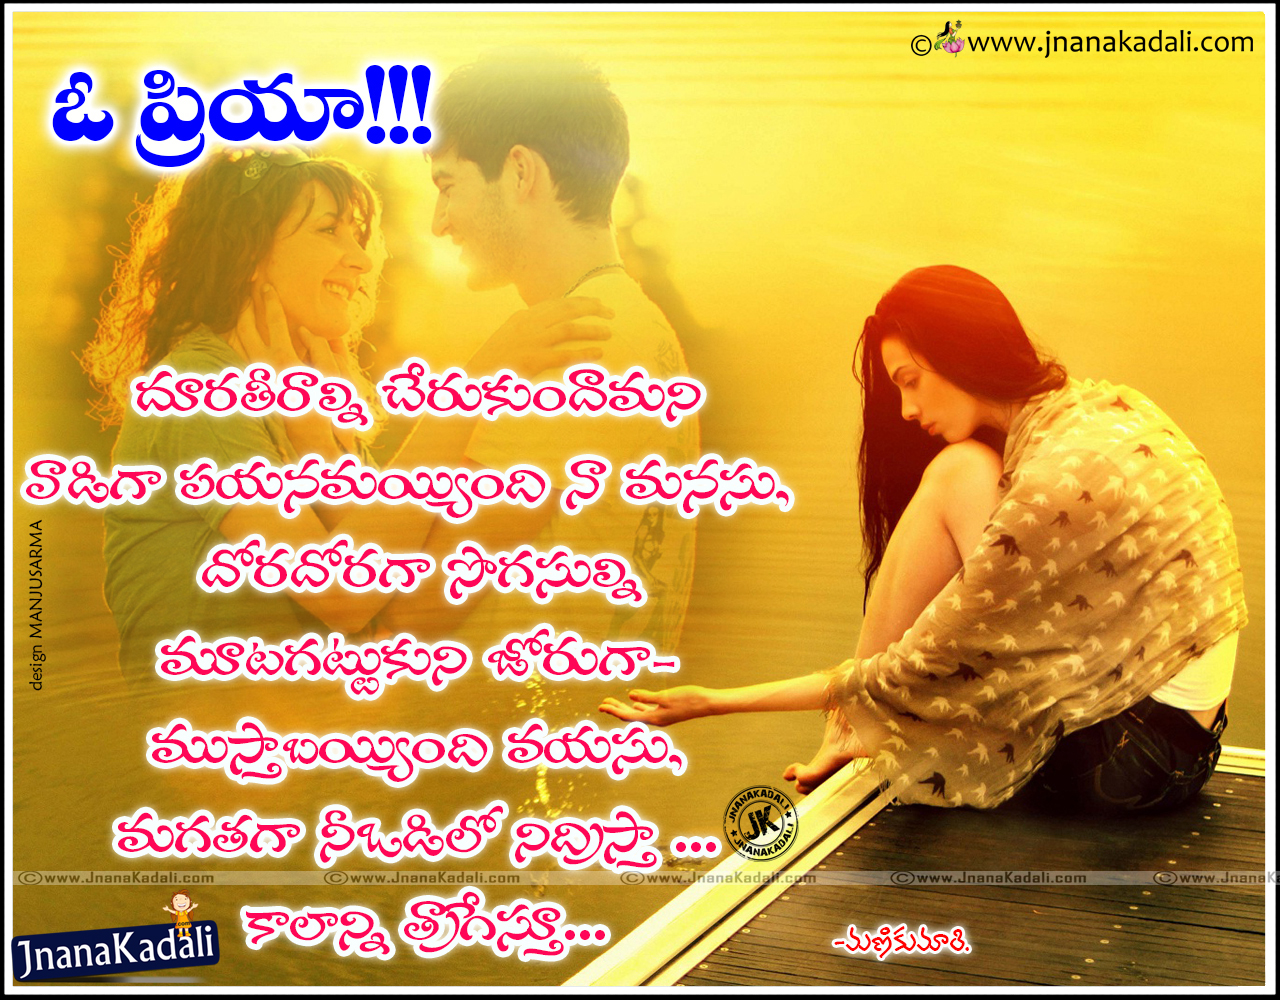 Telugu Language Top Love Messages and Greetings written by Manikumari ...